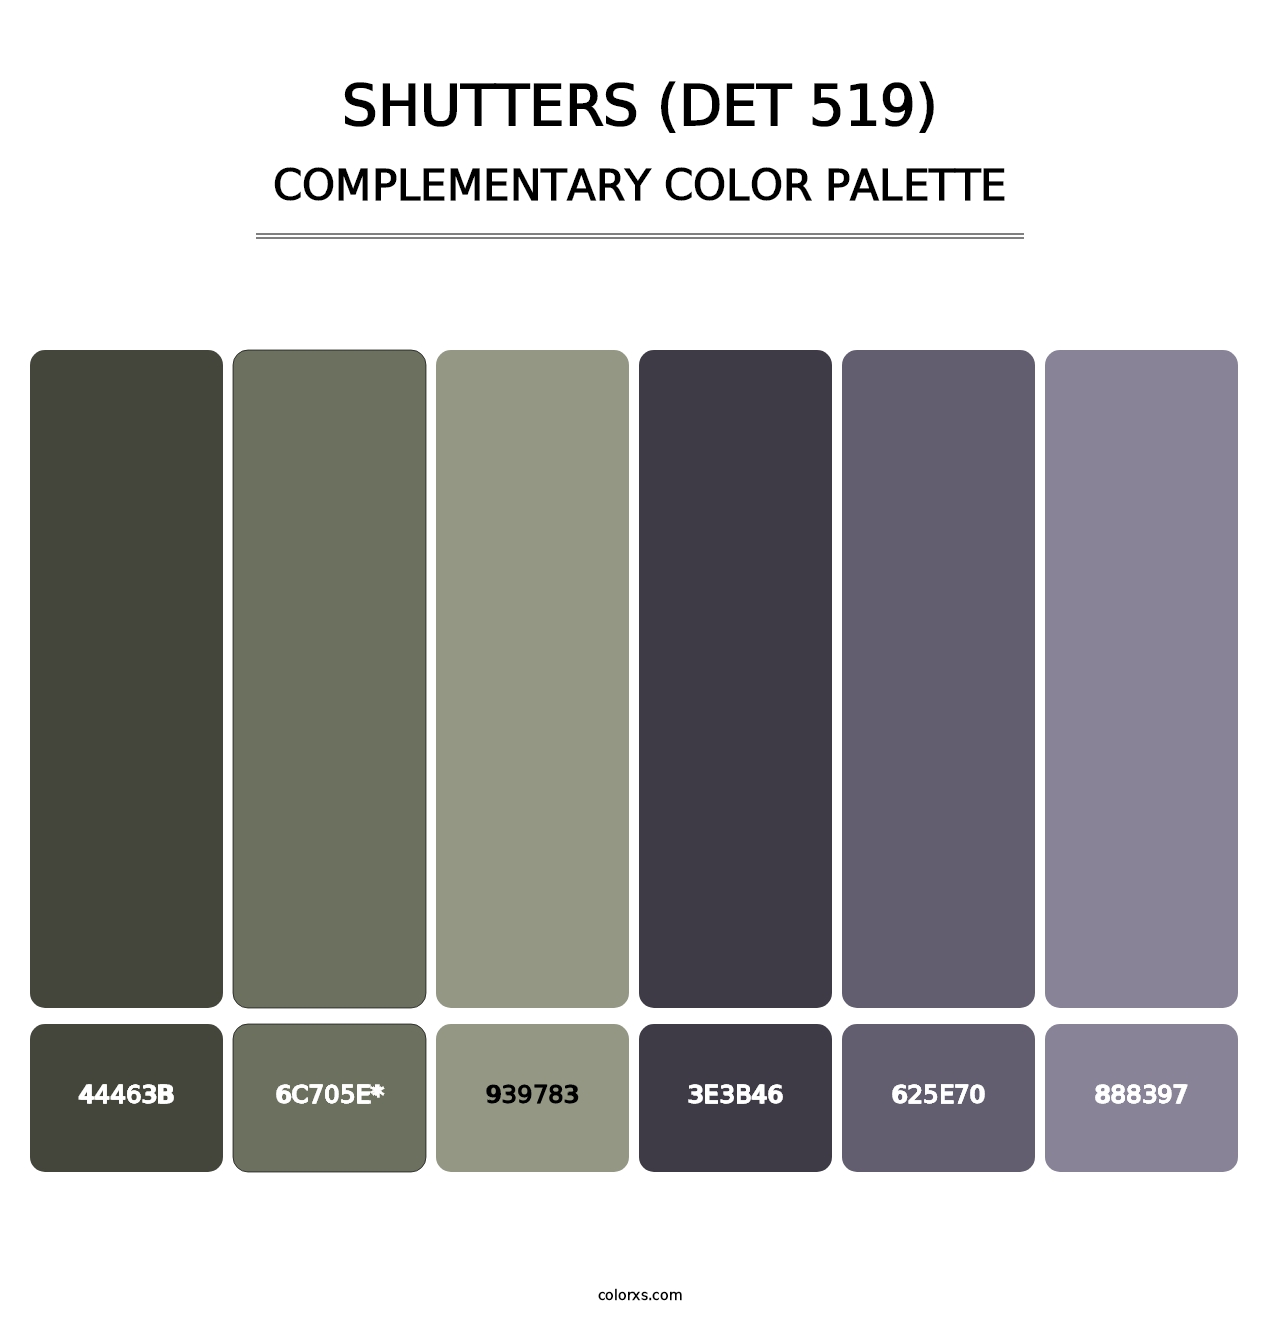 Shutters (DET 519) - Complementary Color Palette